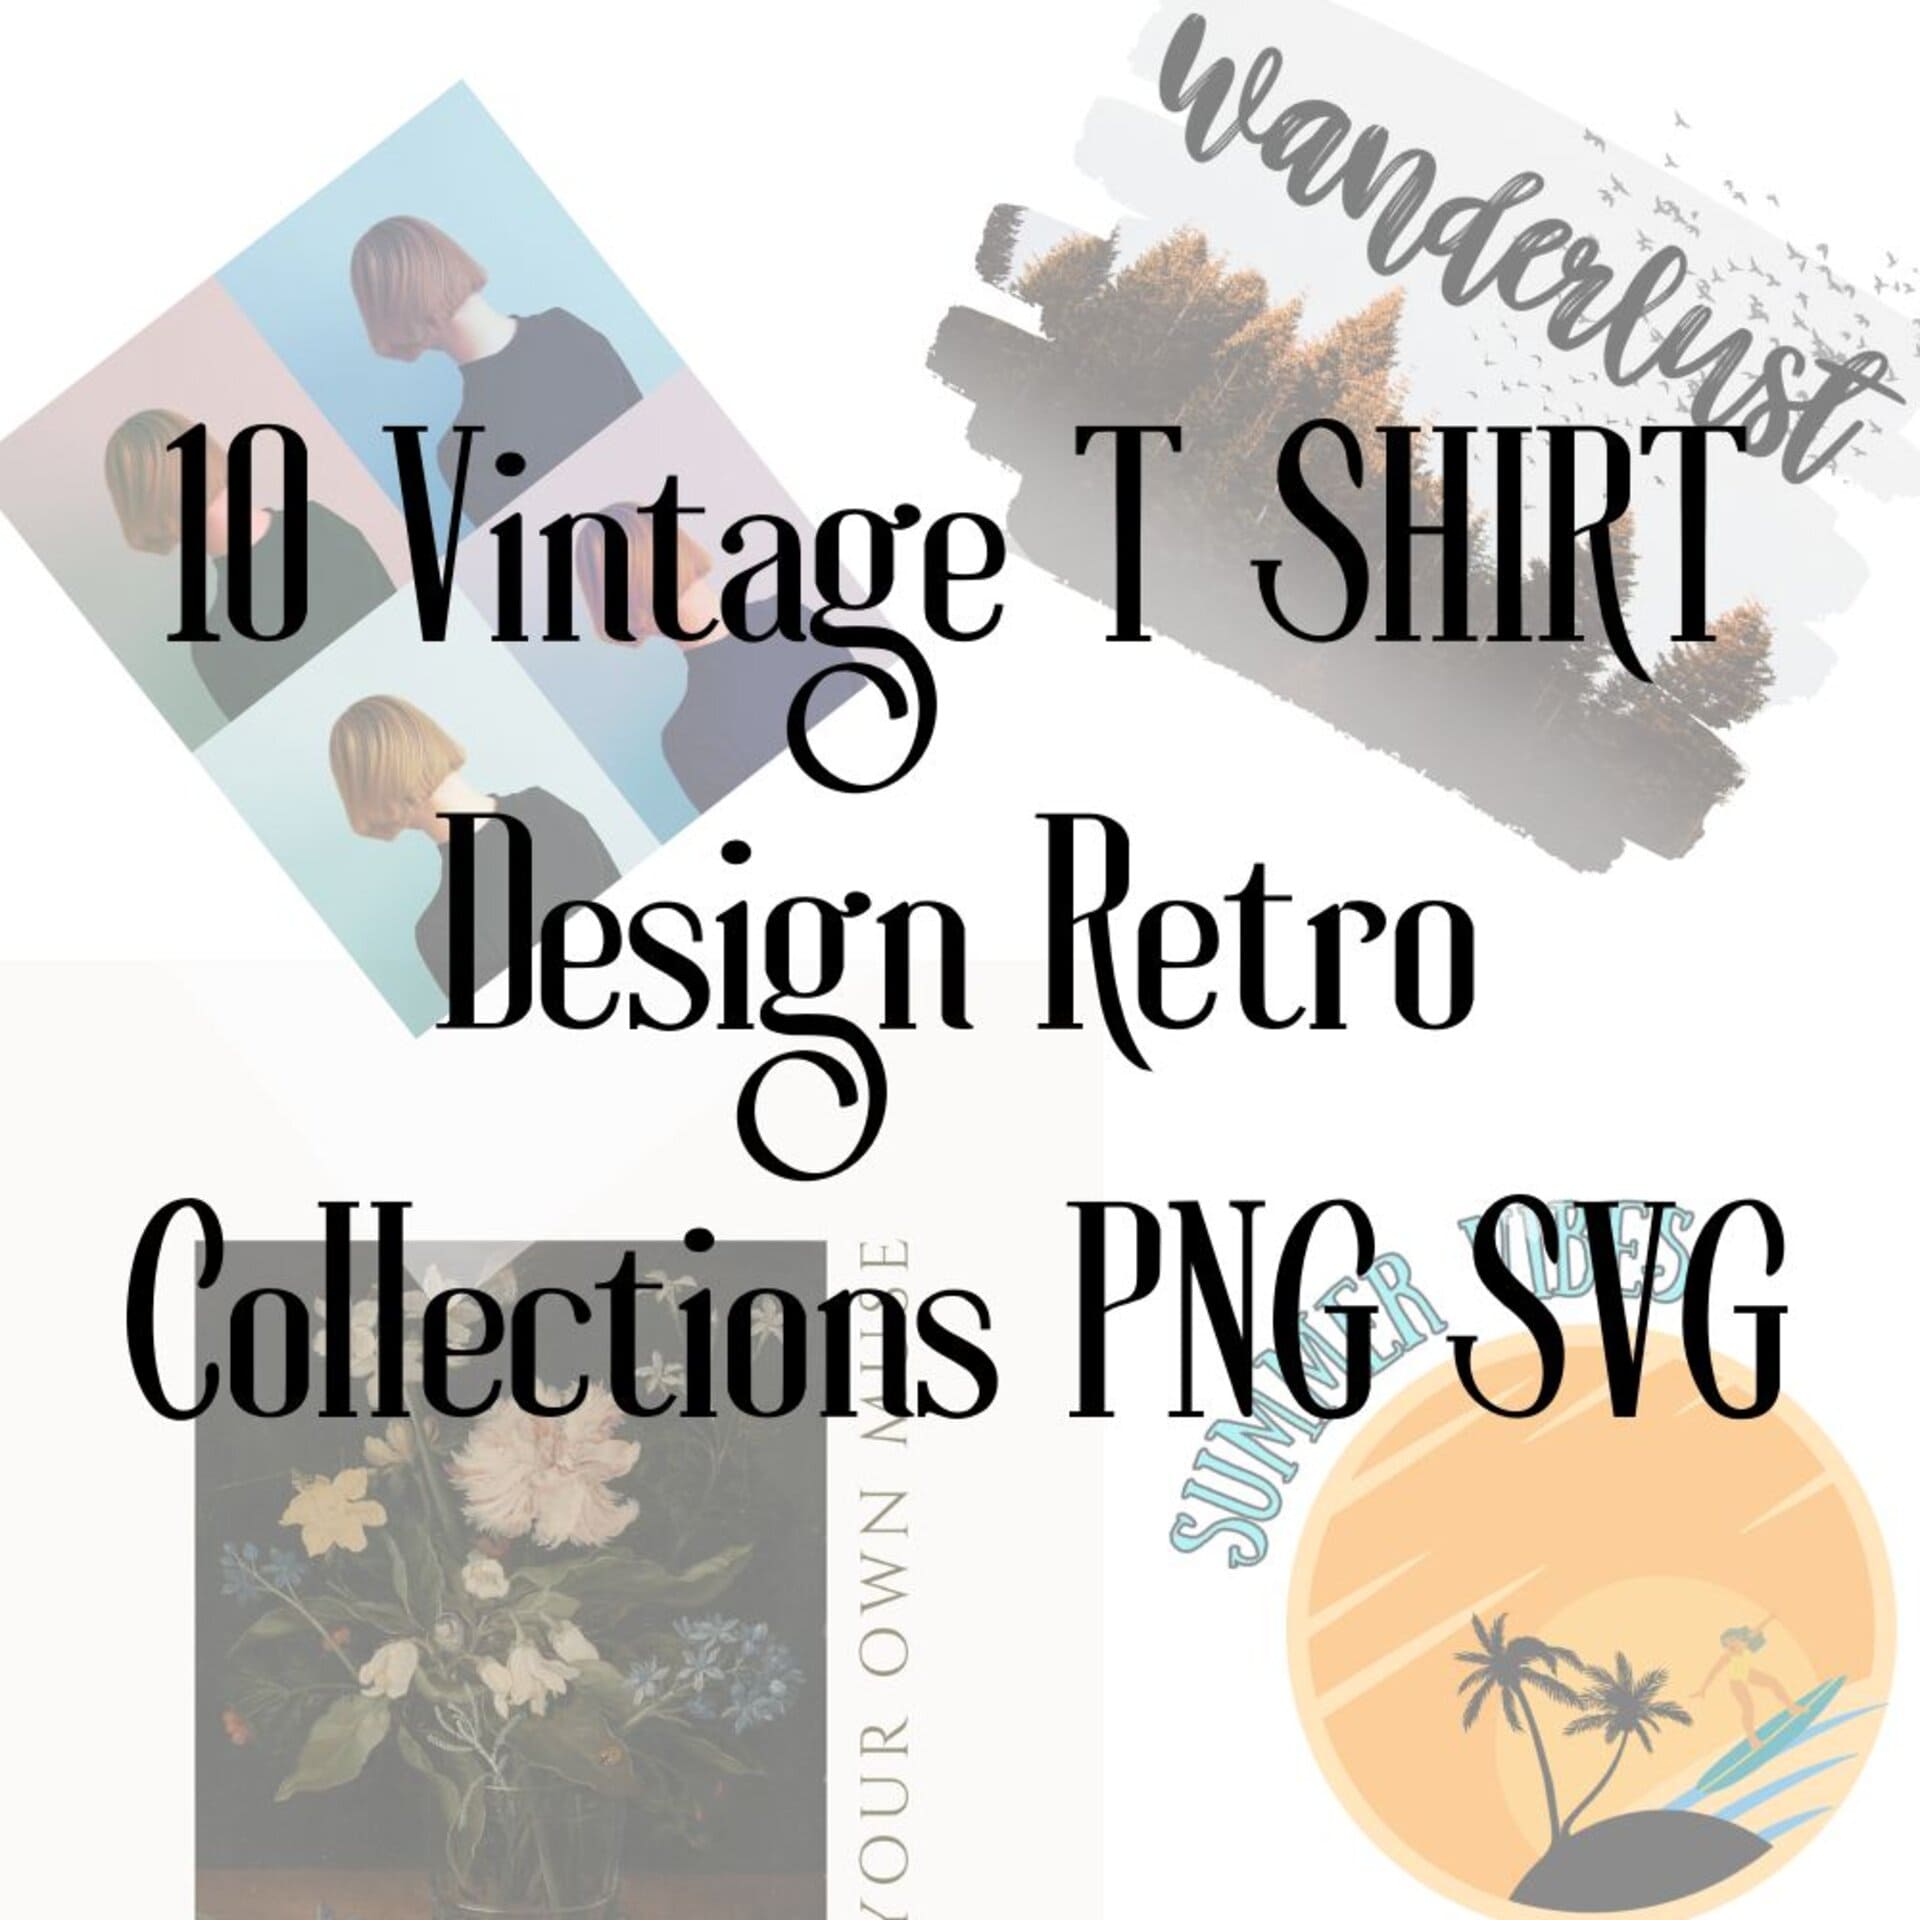 10 vintage t shirt design retro collections png svg 1